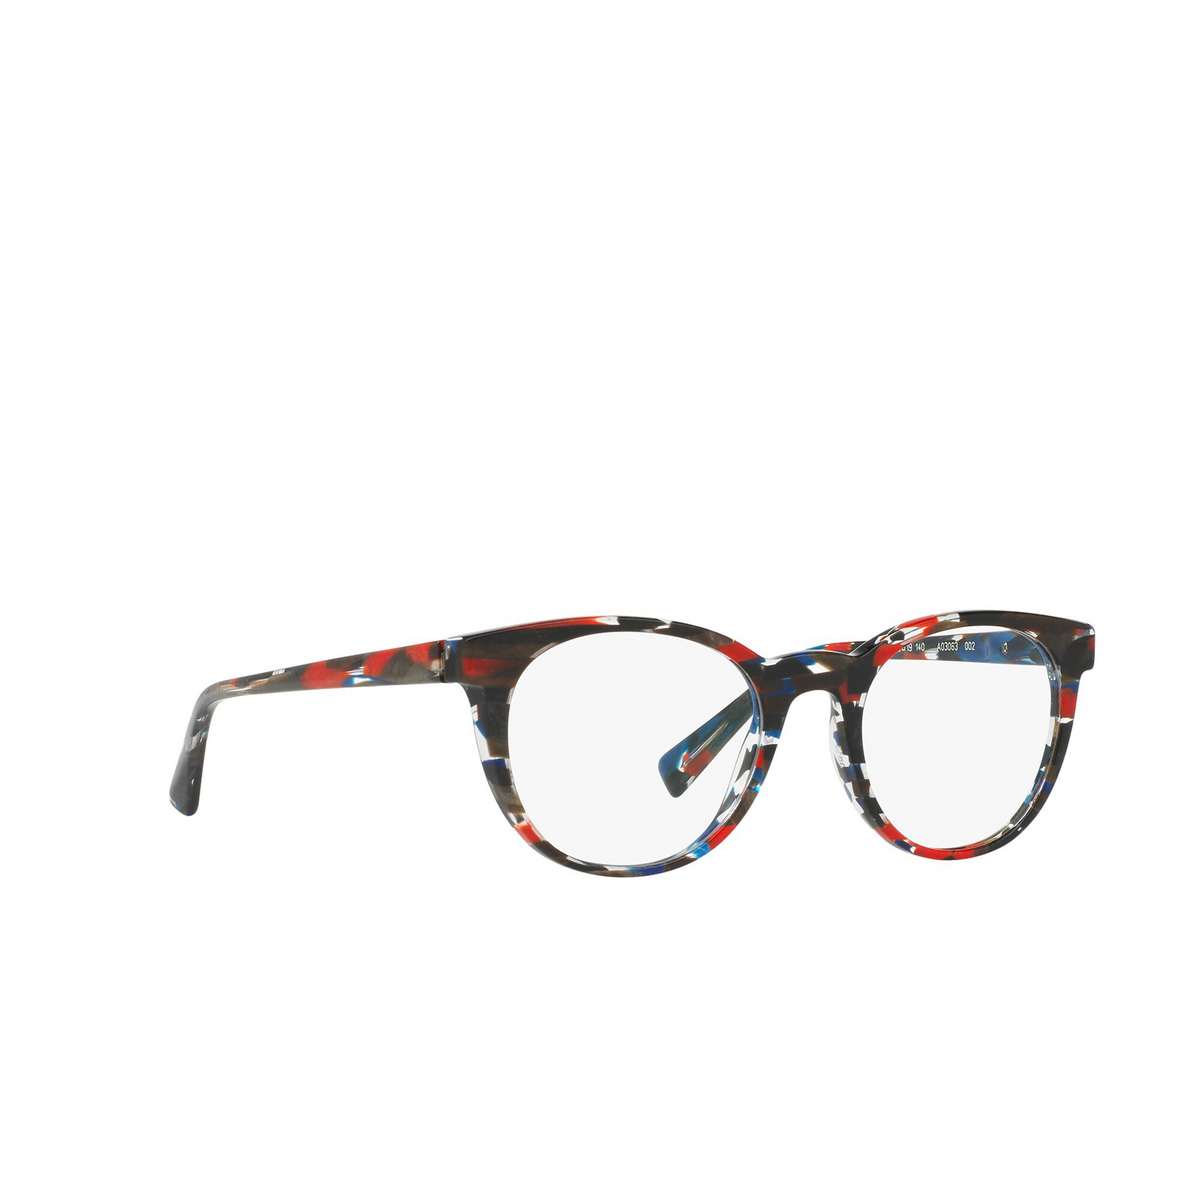 Alain Mikli® Round Eyeglasses: A03063 color Striped Blue Red Black 002 - three-quarters view.